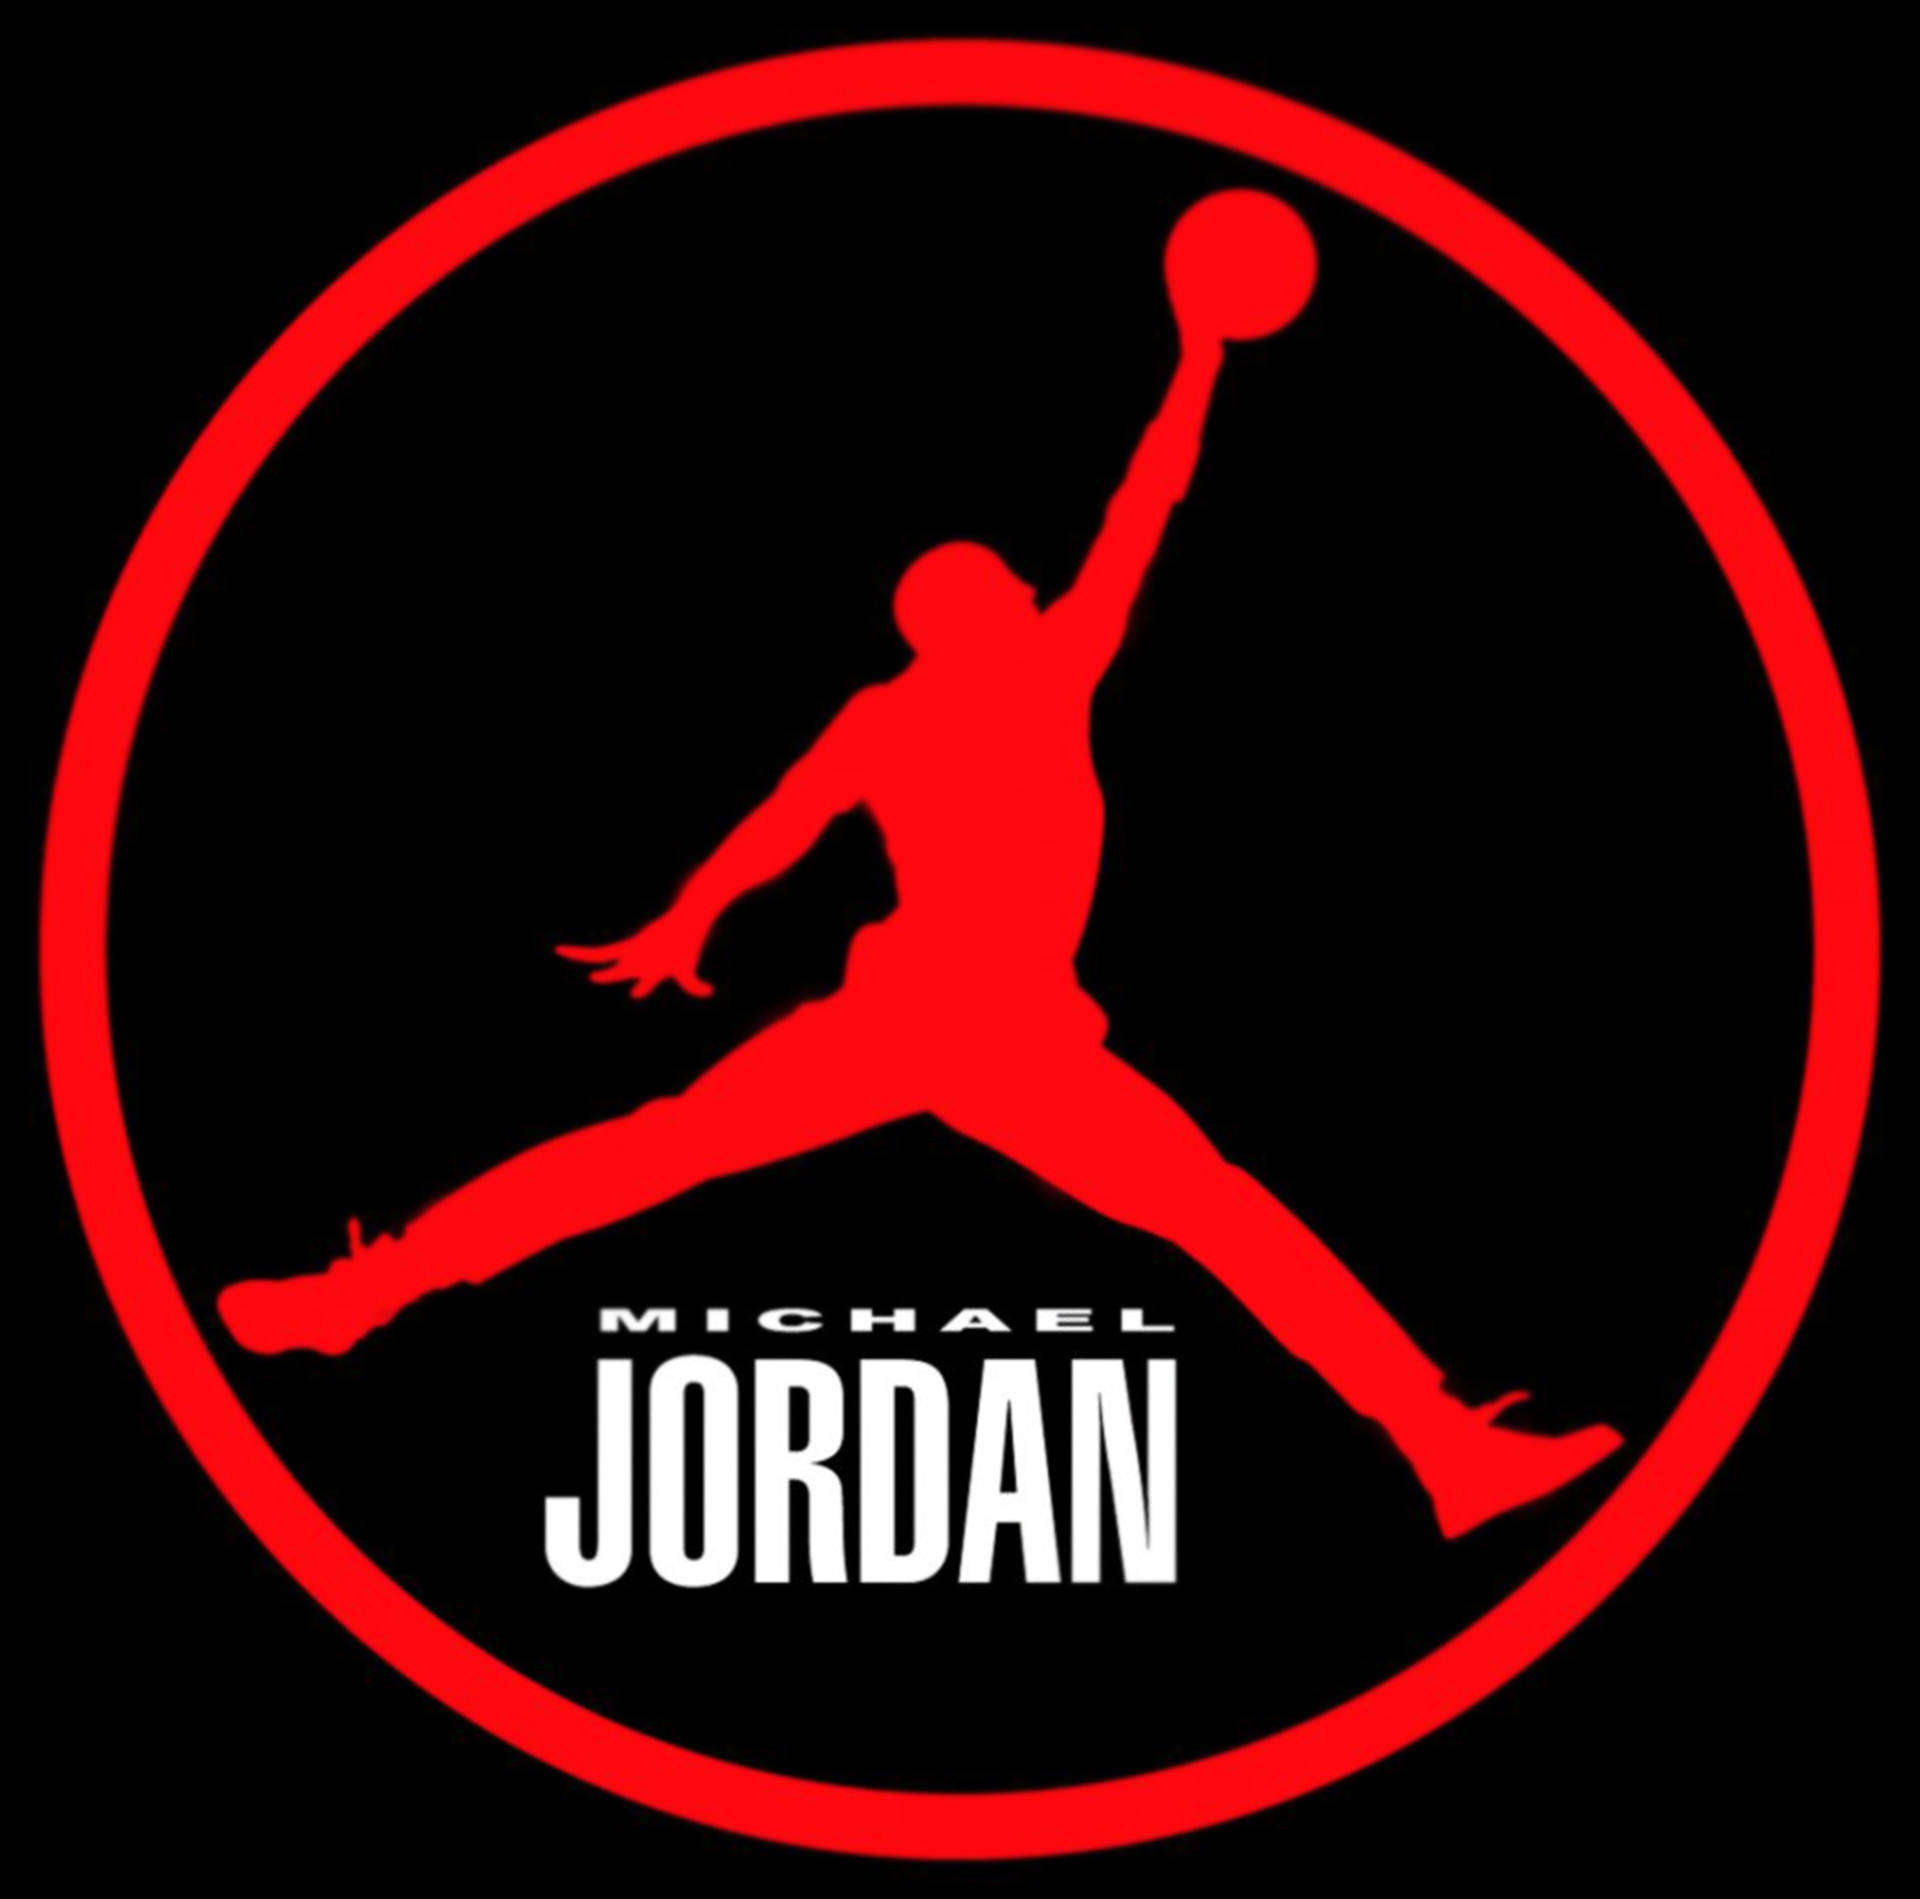 Air Jordan 1920X1899 Wallpaper and Background Image